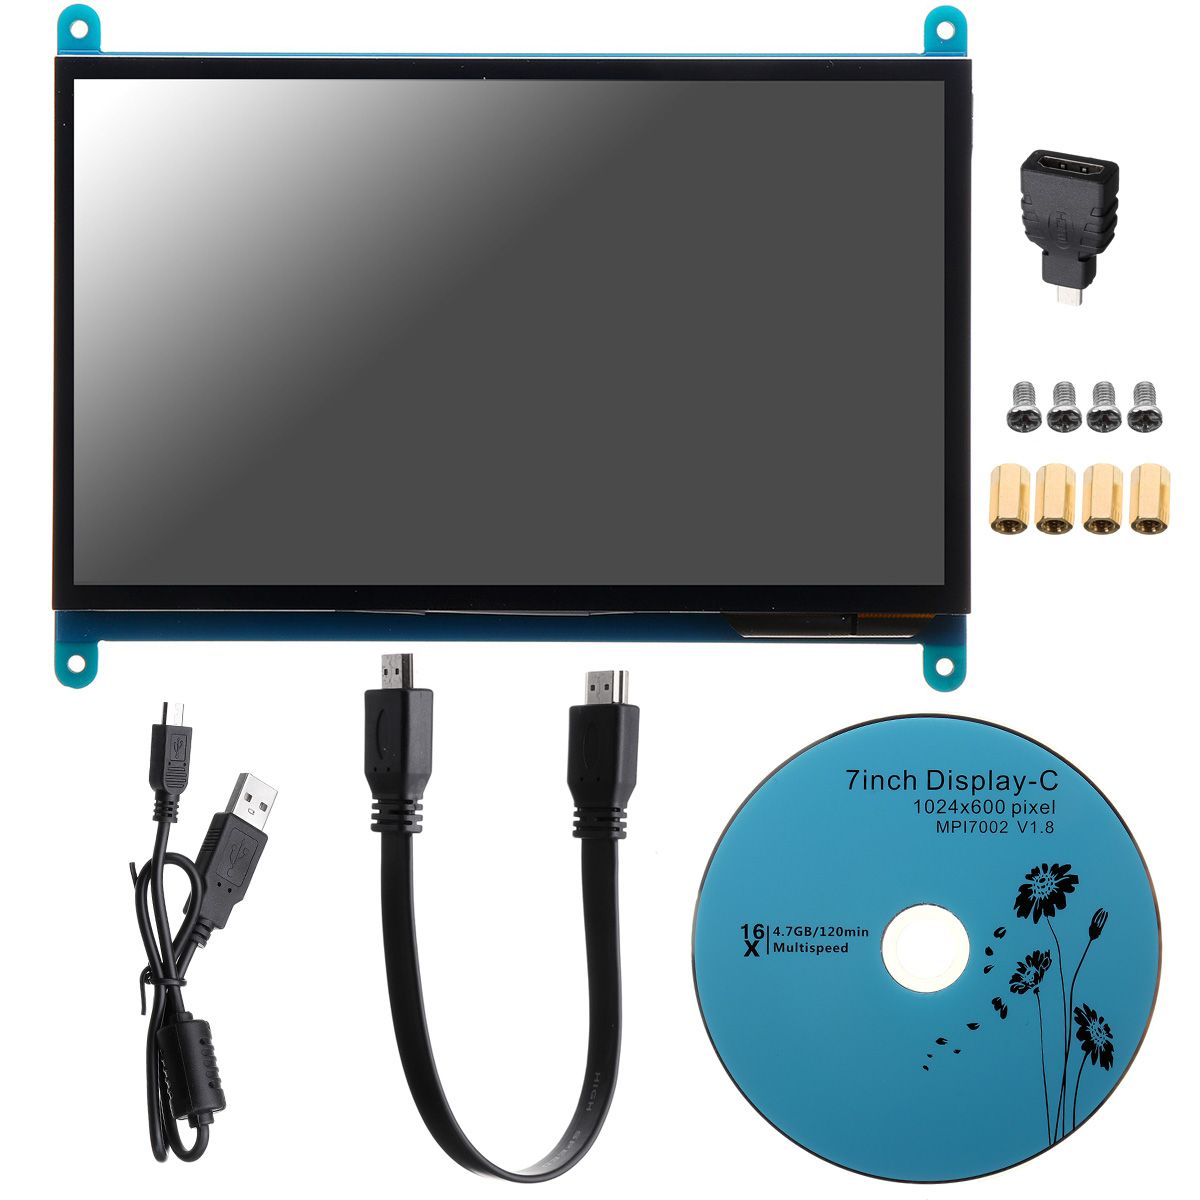 7--HD-1024X600-LCD-display-Capacitive-touchscreen-monitor-for-Pi-4B--3B--1669657